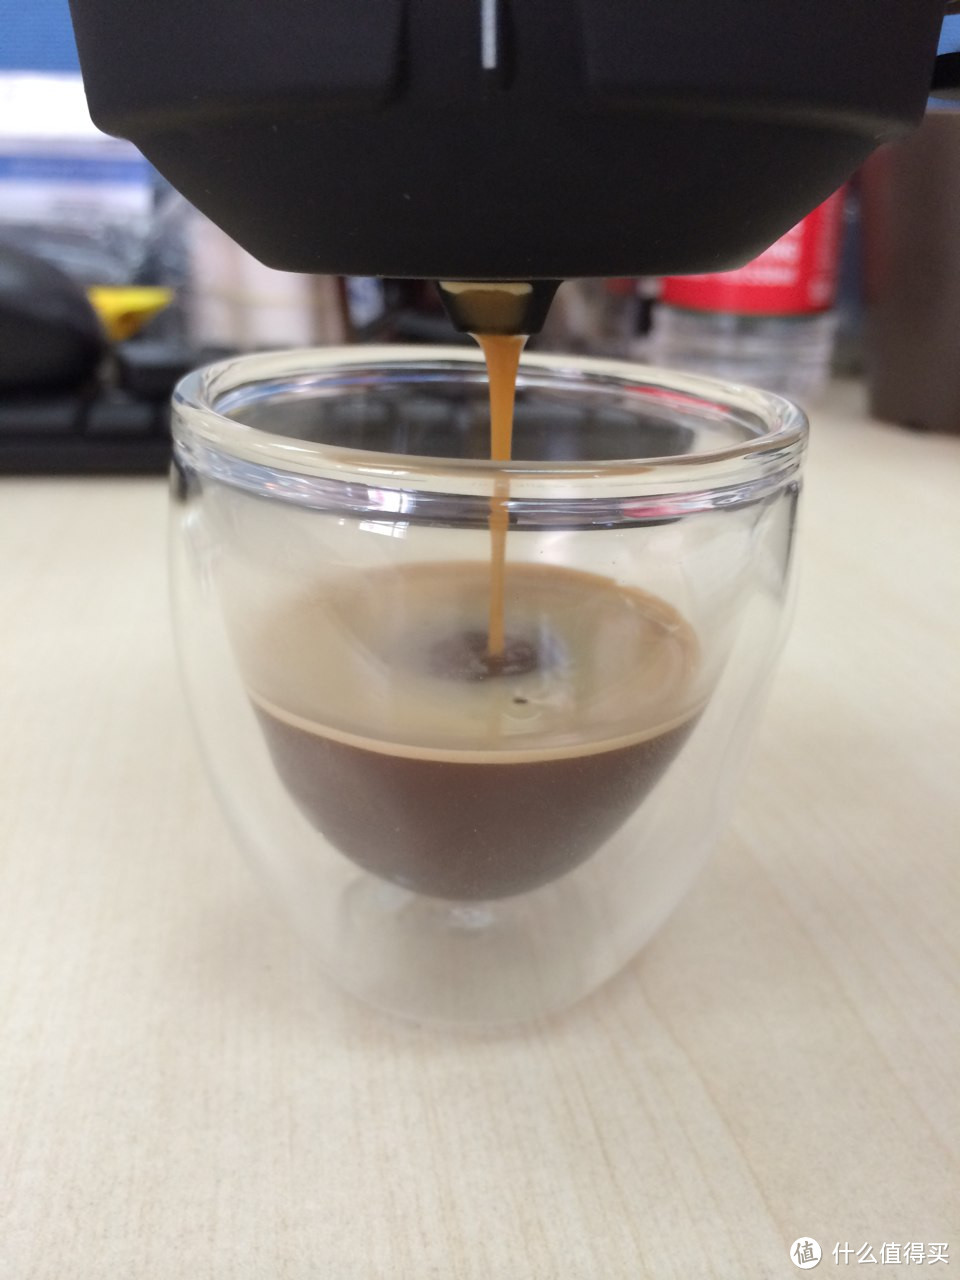 Handpresso Wild Hybrid French Press 便携咖啡机